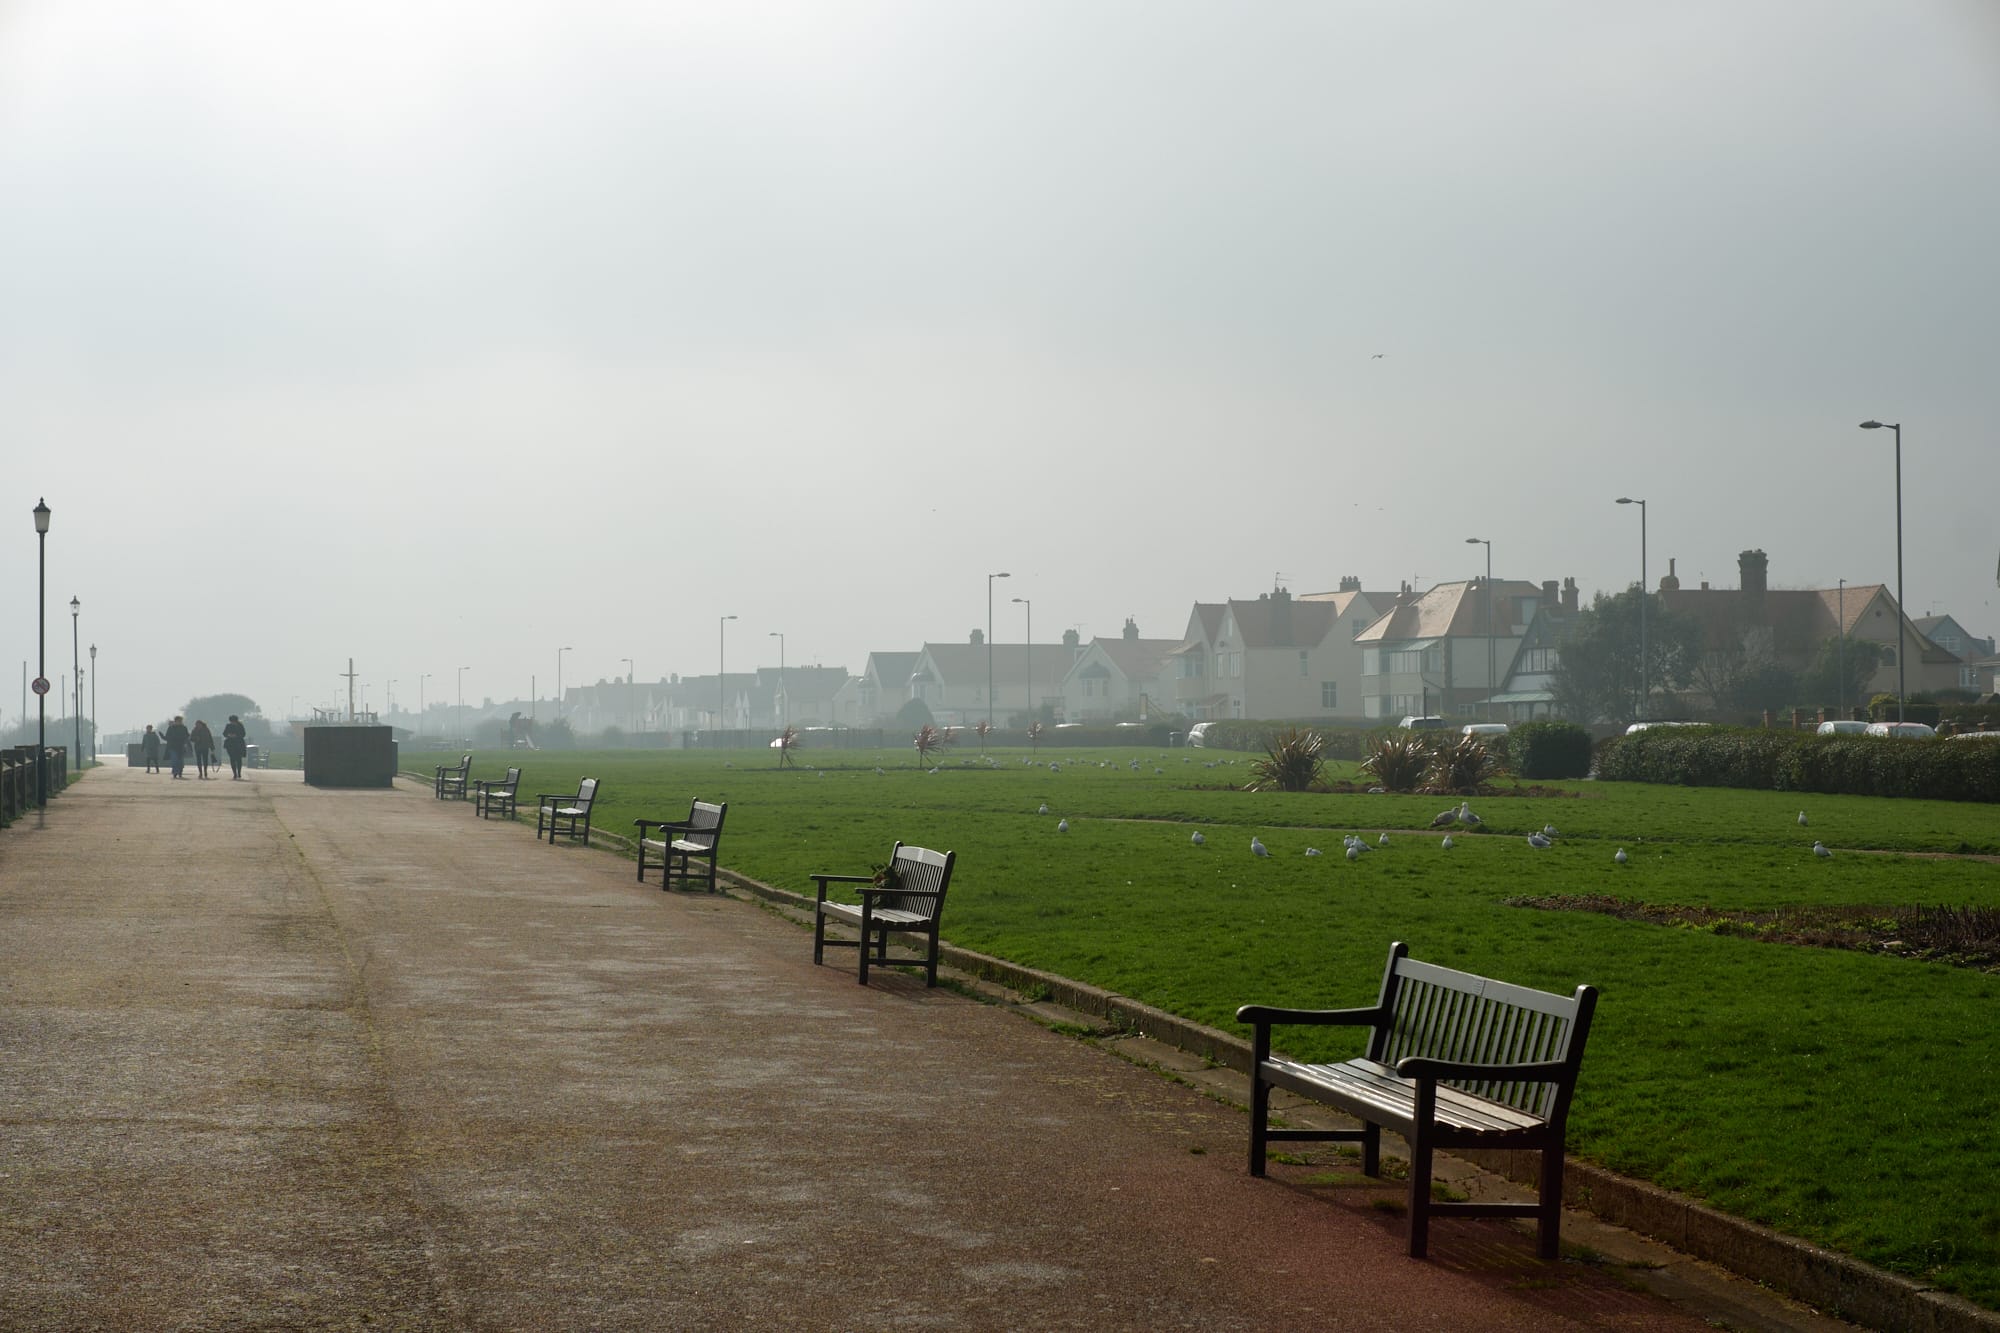 row of benches along the promenade